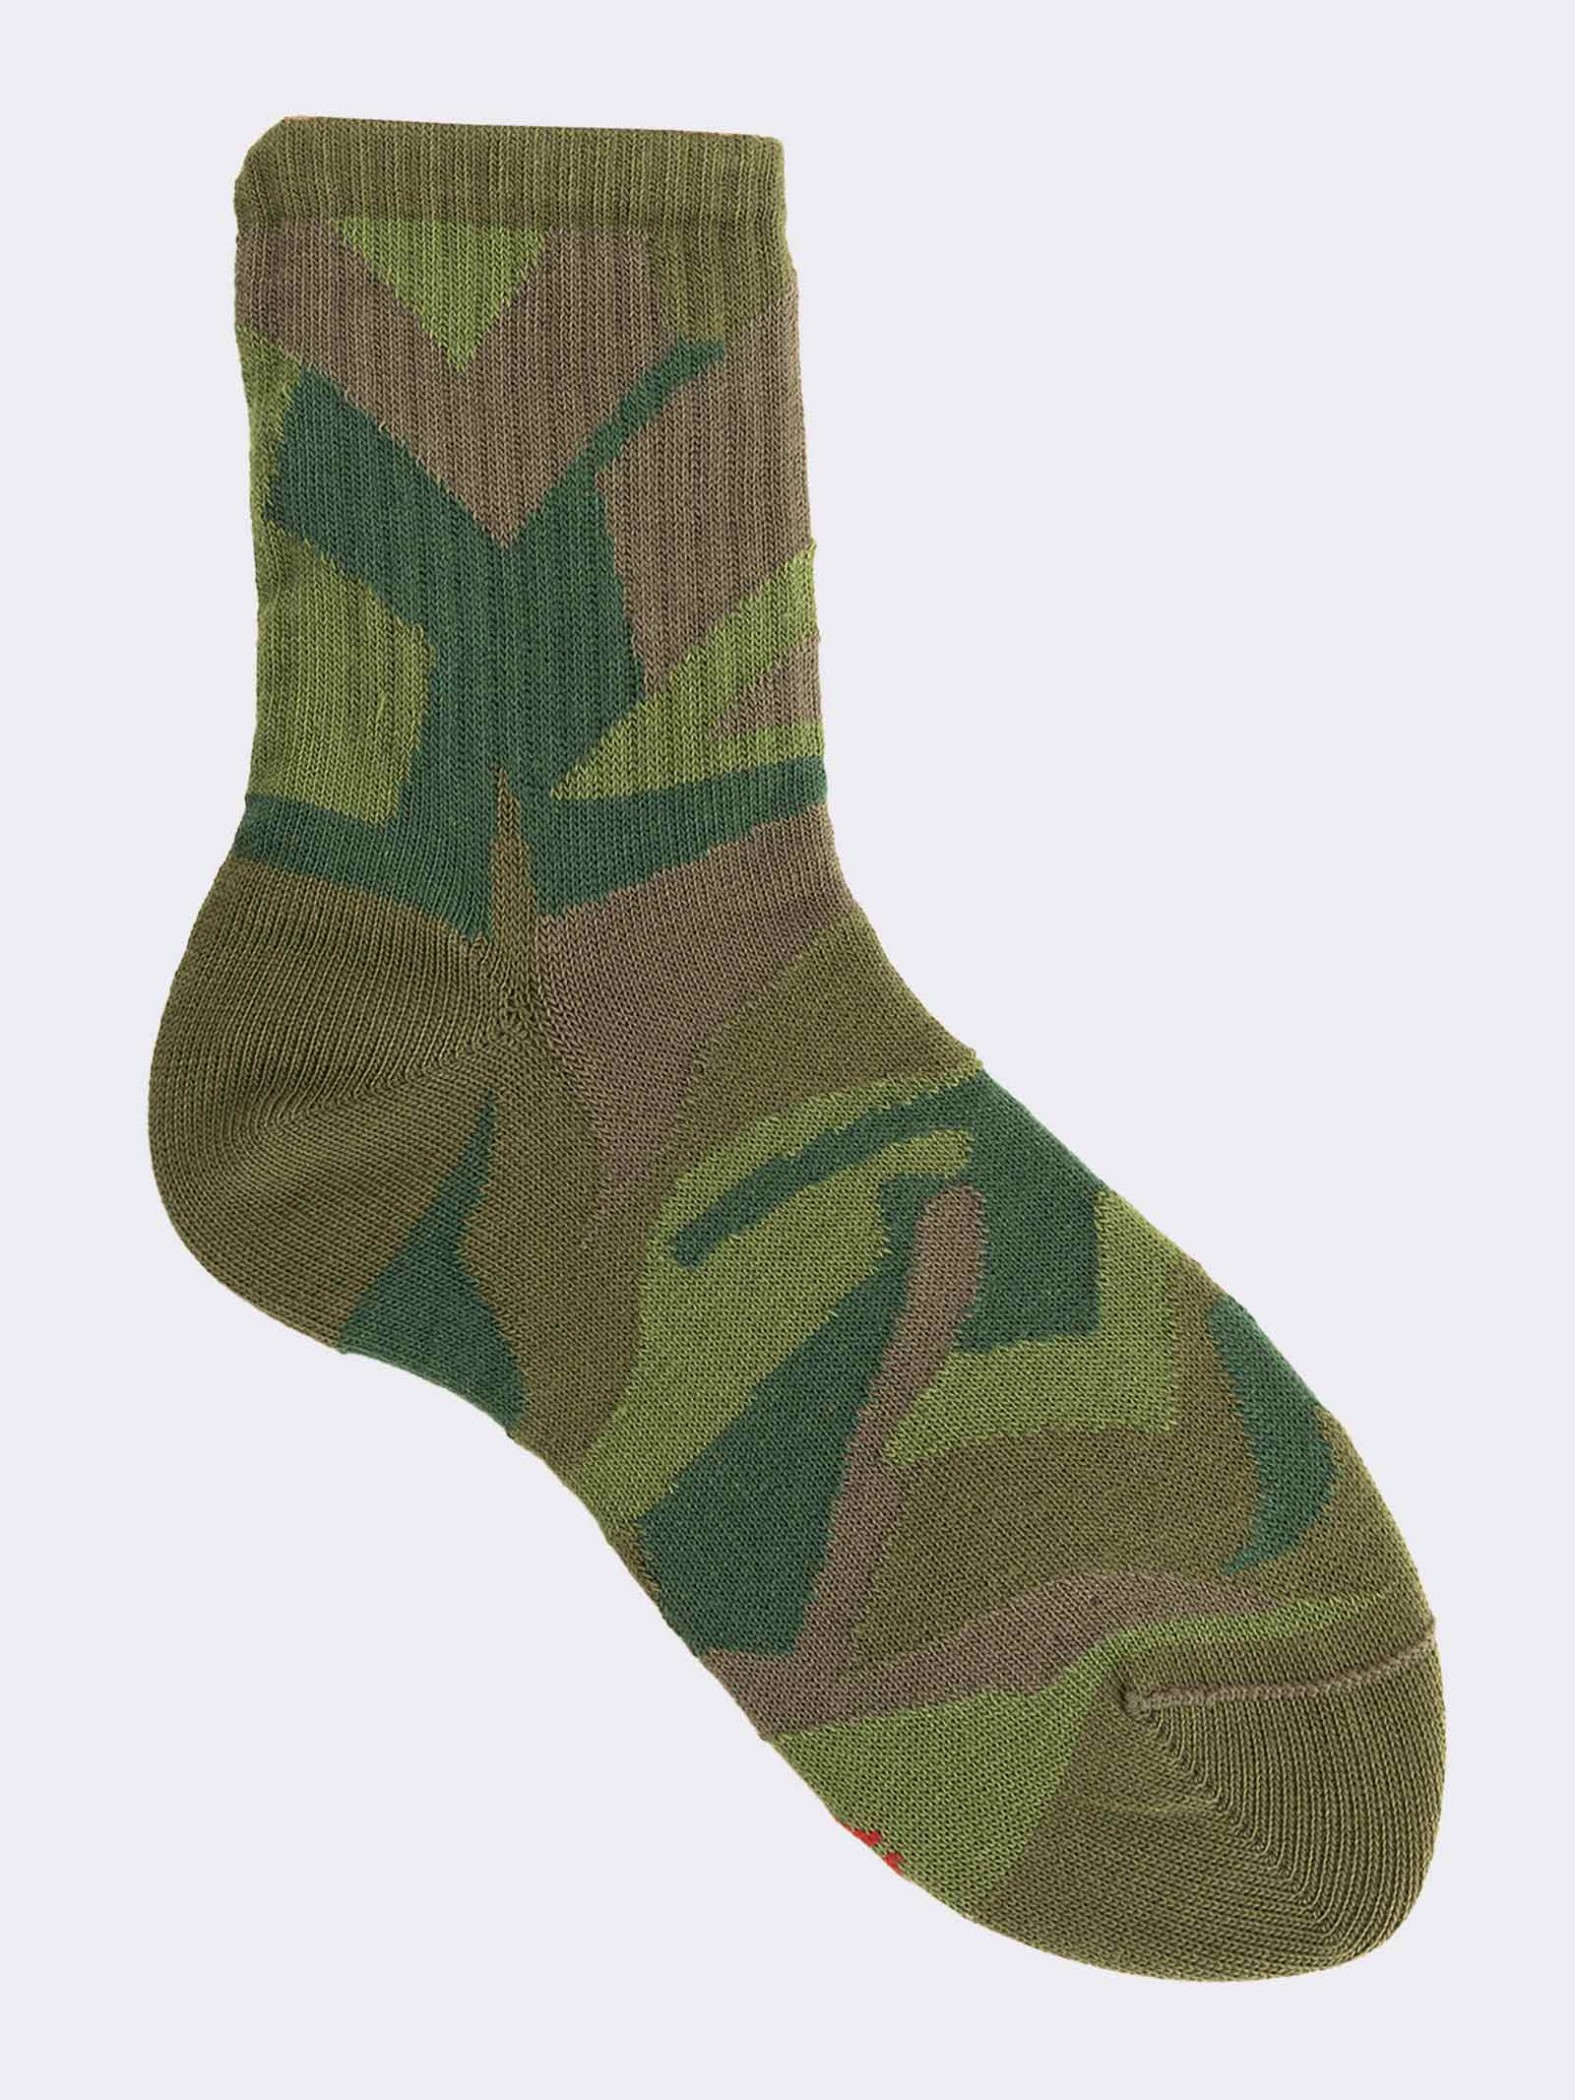 Boy's geometric patterned short sports socks